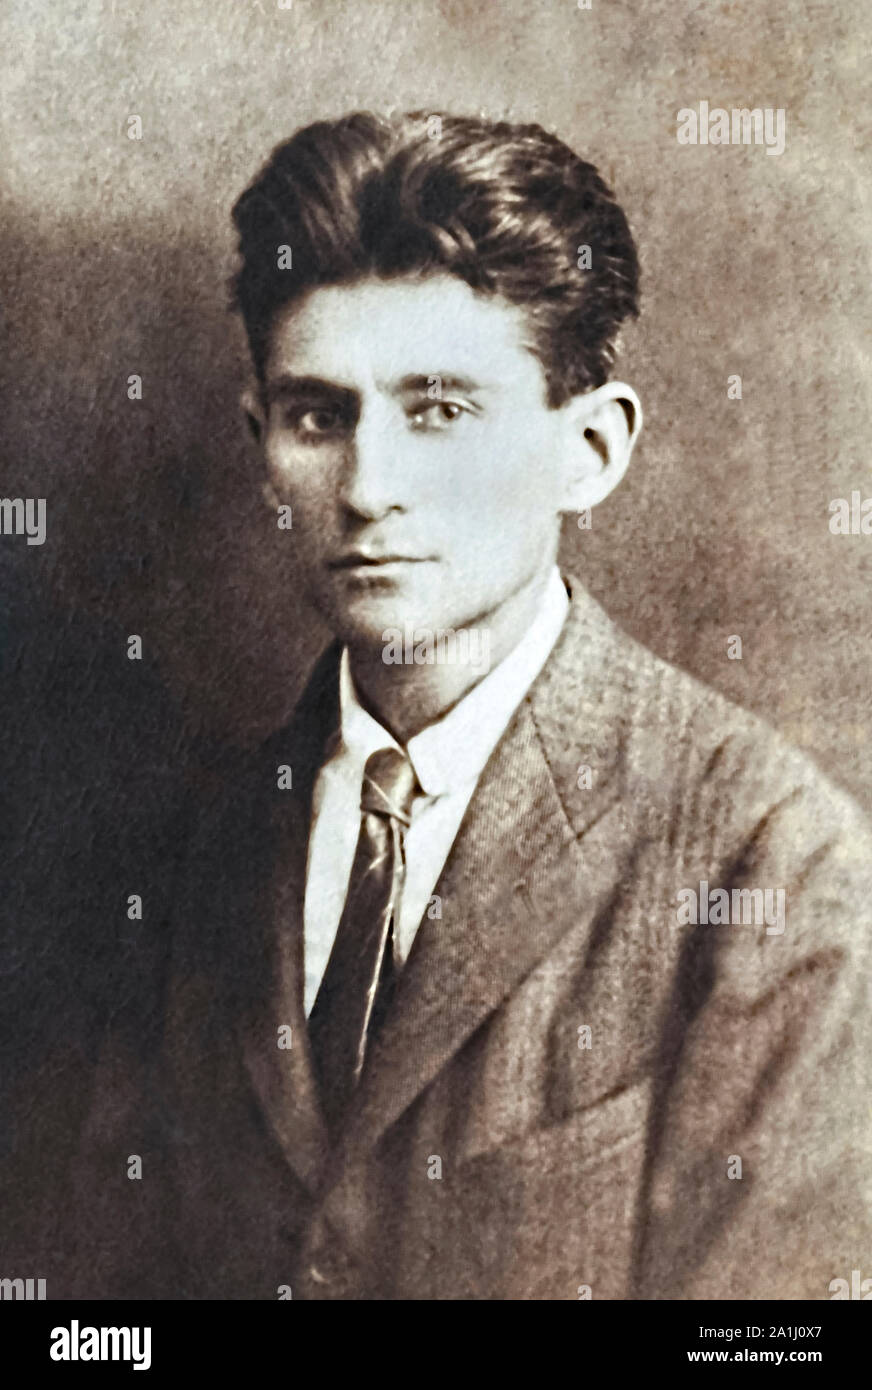 Franz Kafka (1883-1924) Austro-Hungarian modernist author best known for his surrealist works Die Verwandlung [The Metamorphosis] and Das Schloss [The Castle]. Stock Photo